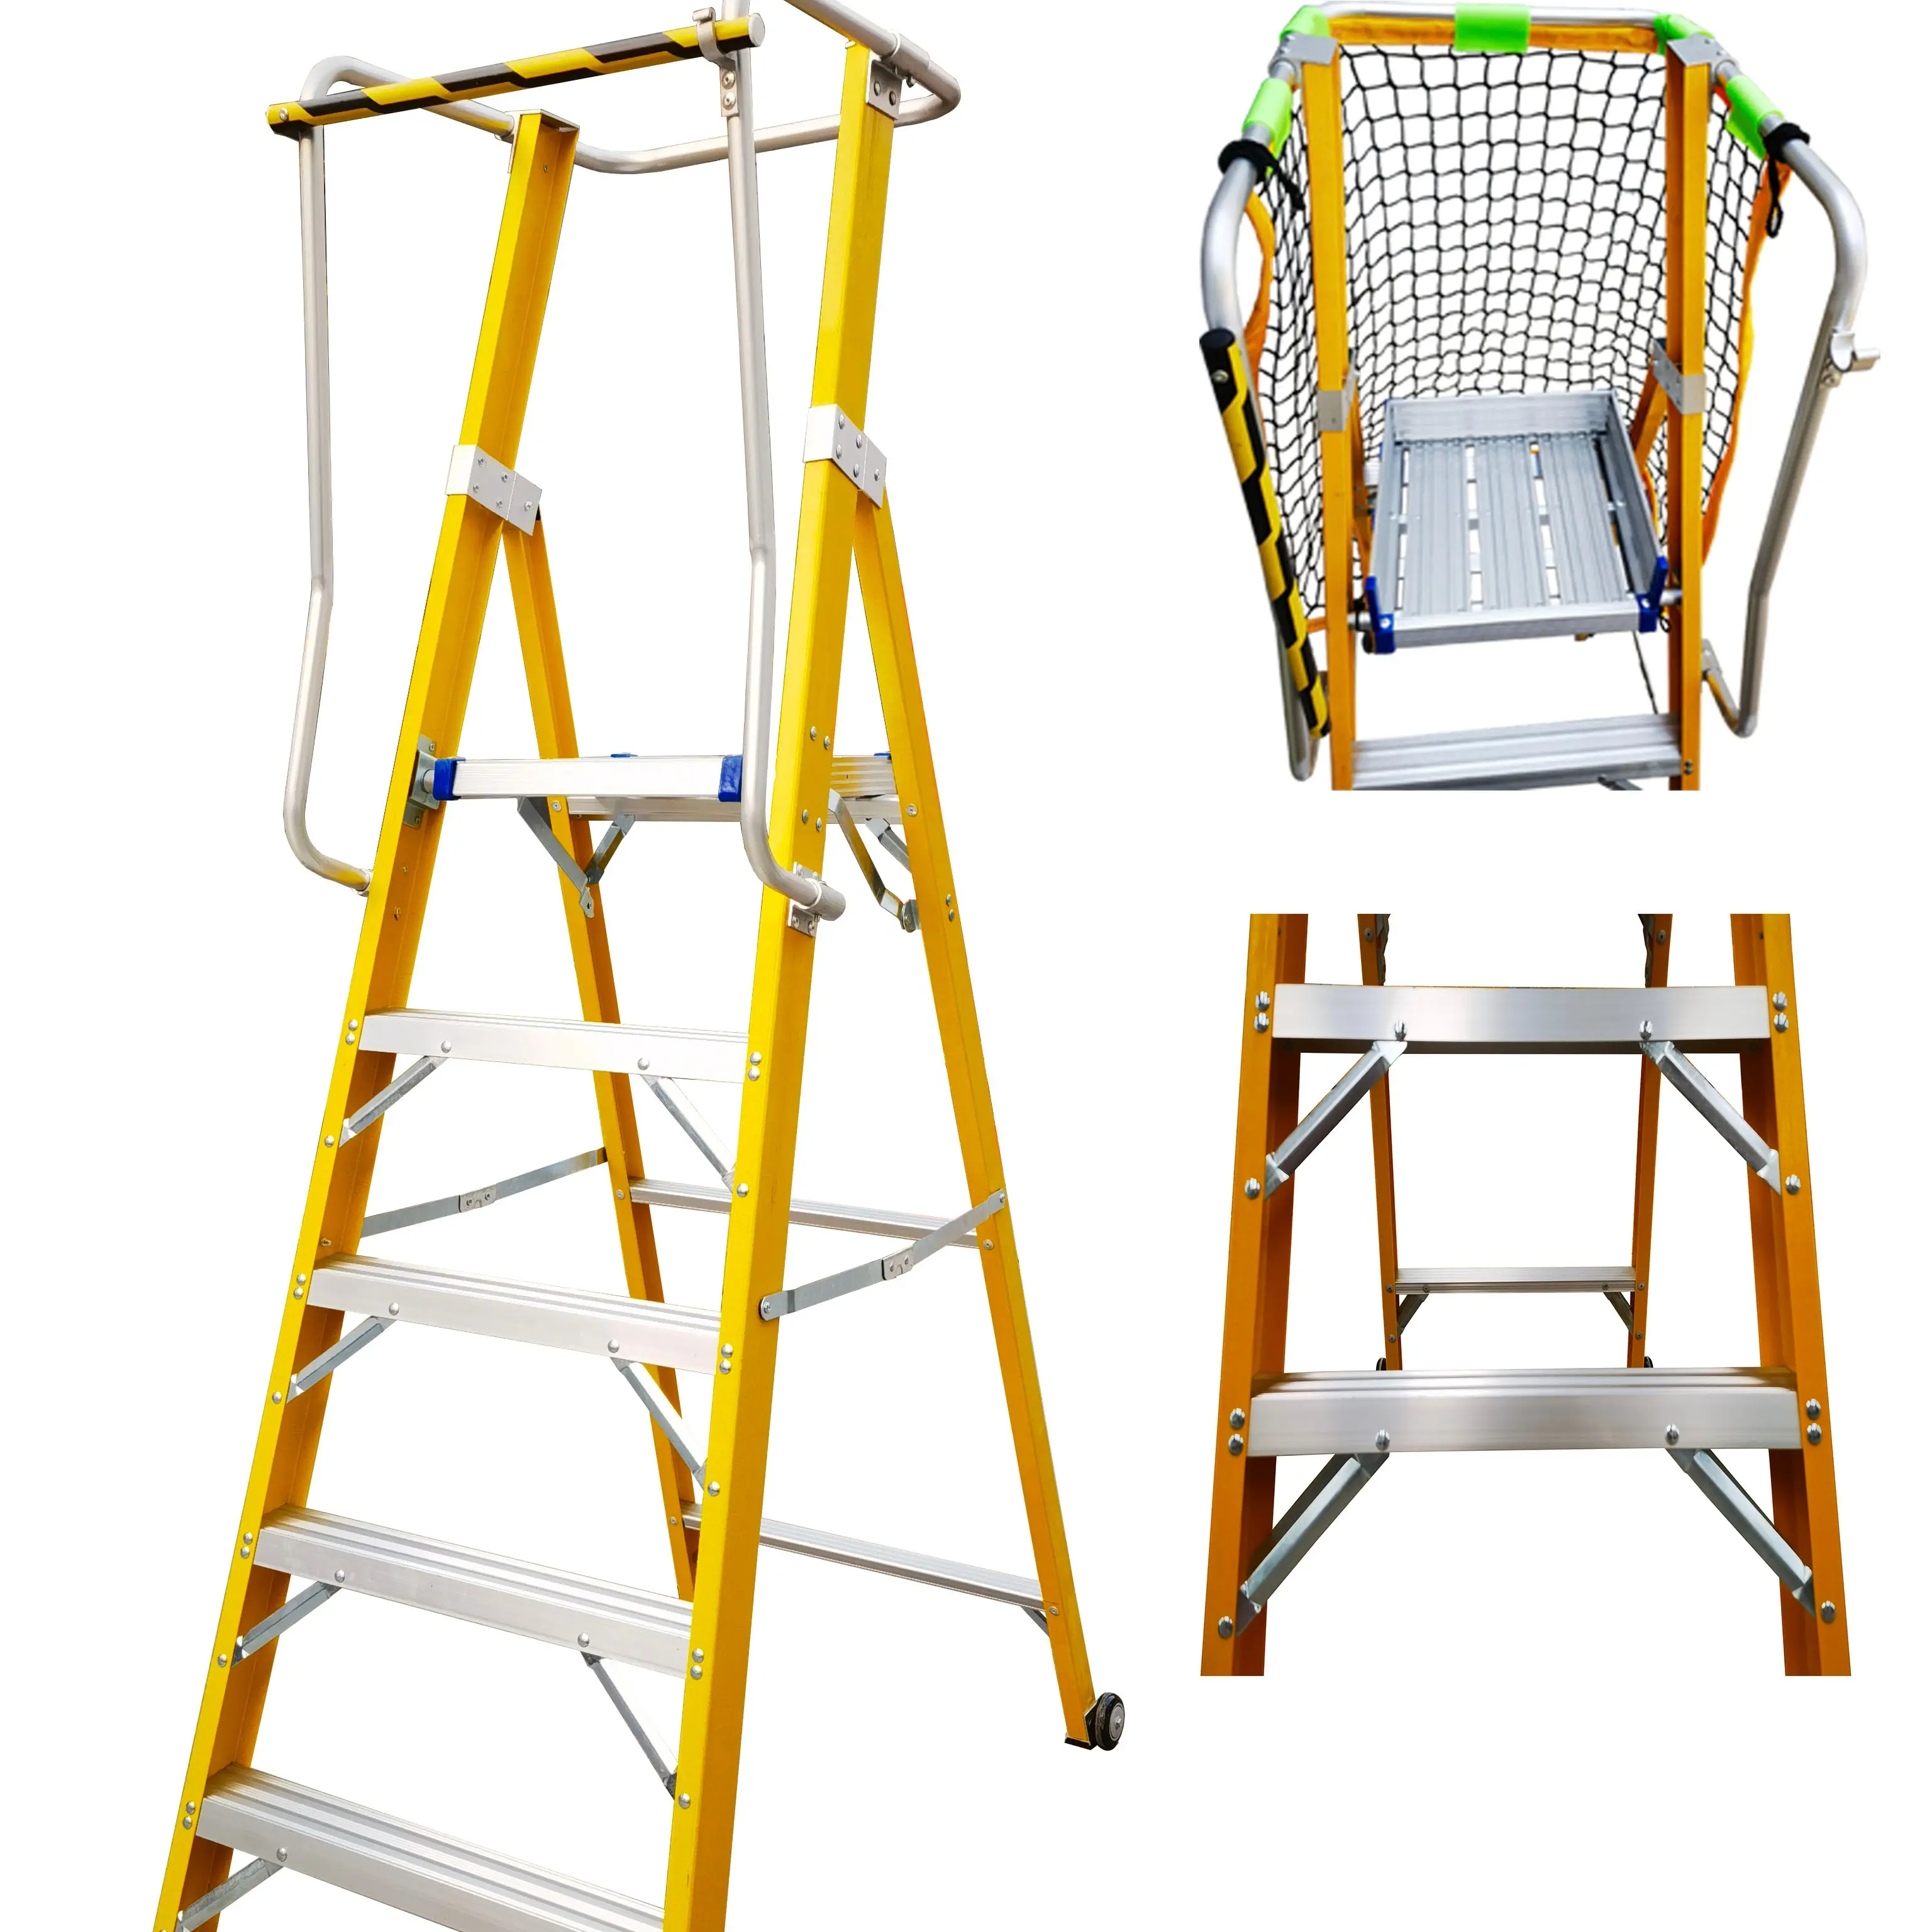 Industrial Mobile Portable Insulated Fiberglass Ladder Platform Step Ladder Stand With Handrail fiberglass extension ladder